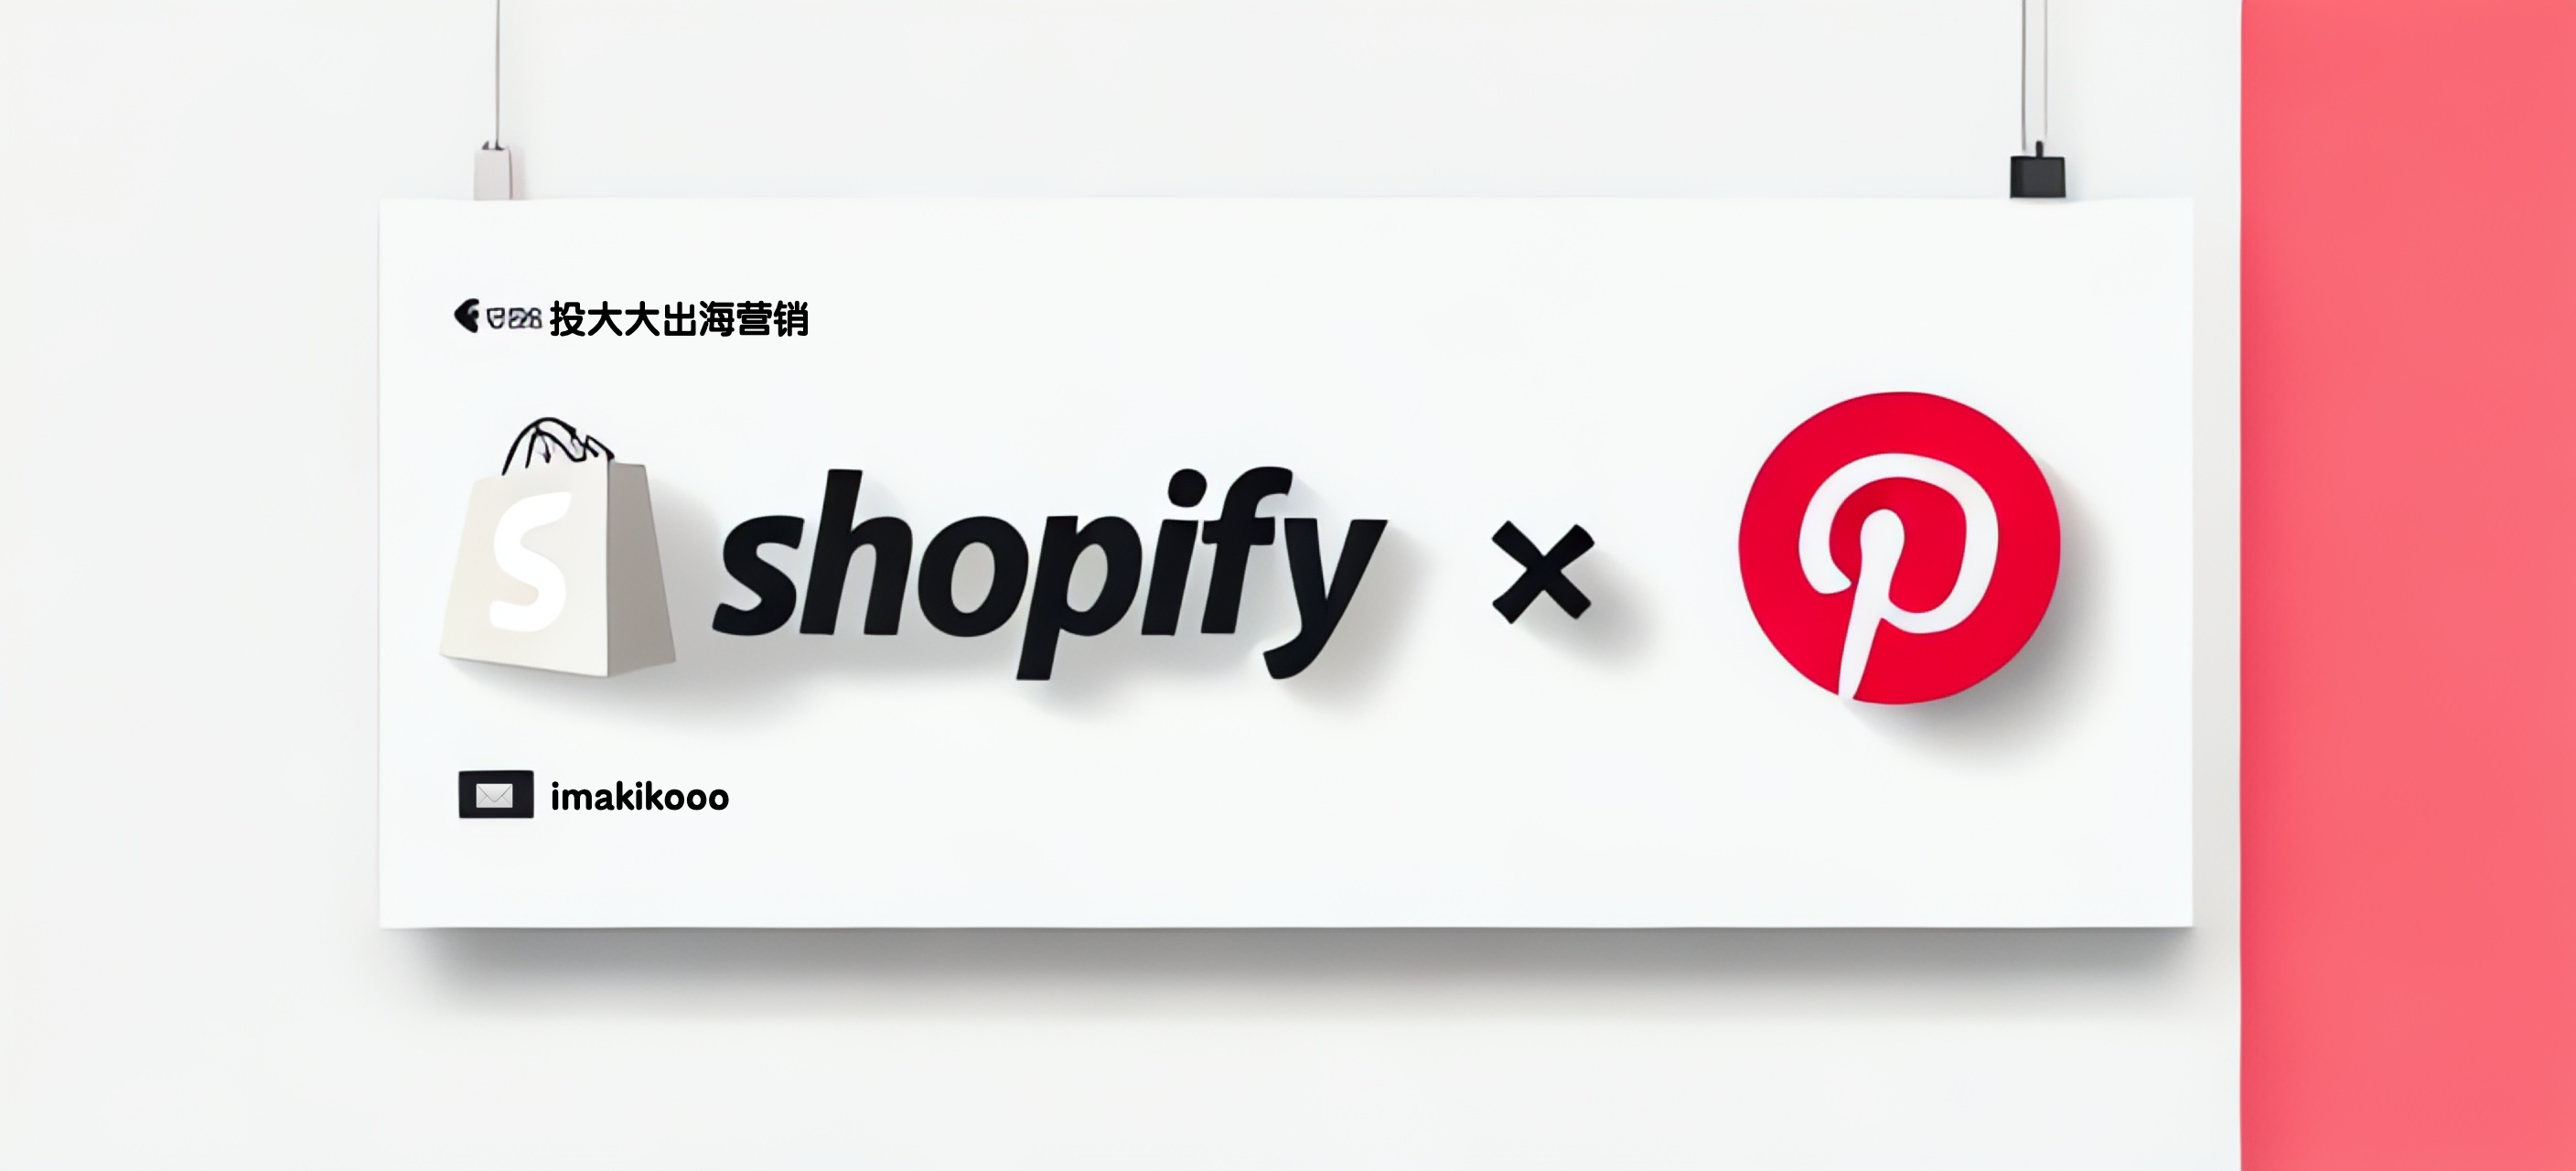 Pinterest营销：提升Shopify引流的关键策略